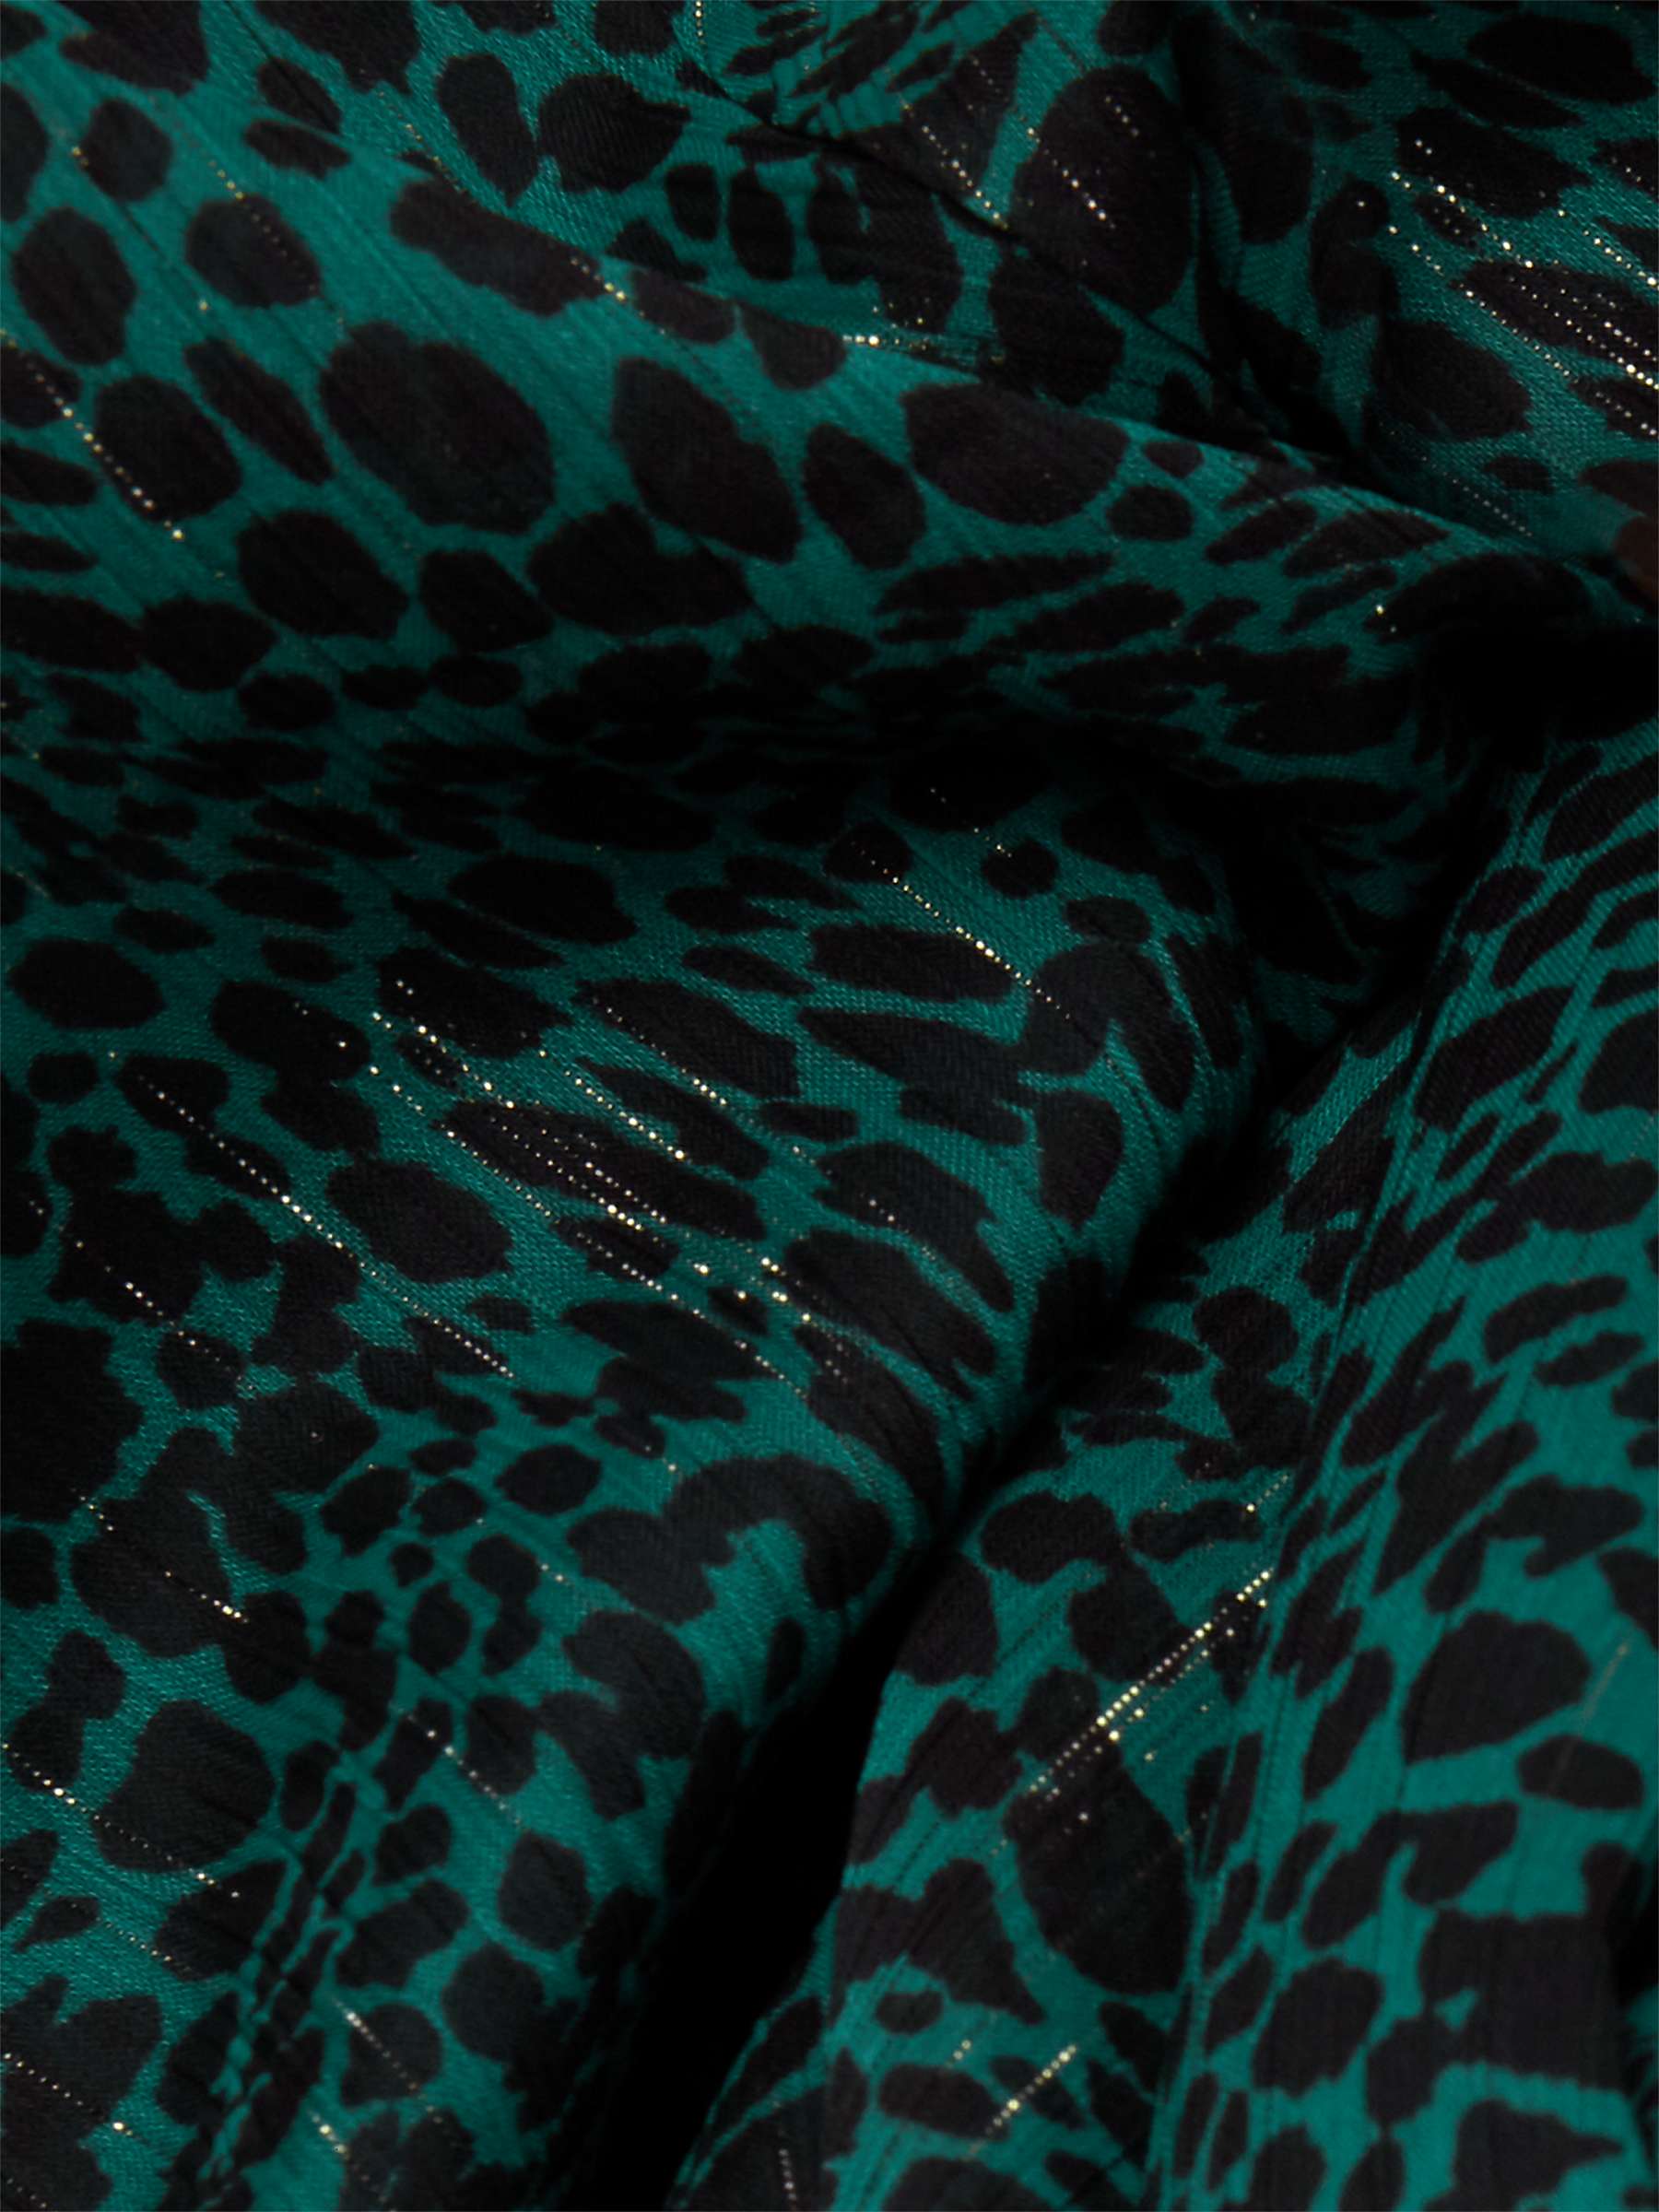 Buy Hobbs Danica Leopard Print Midi Dress, Sea Green Online at johnlewis.com